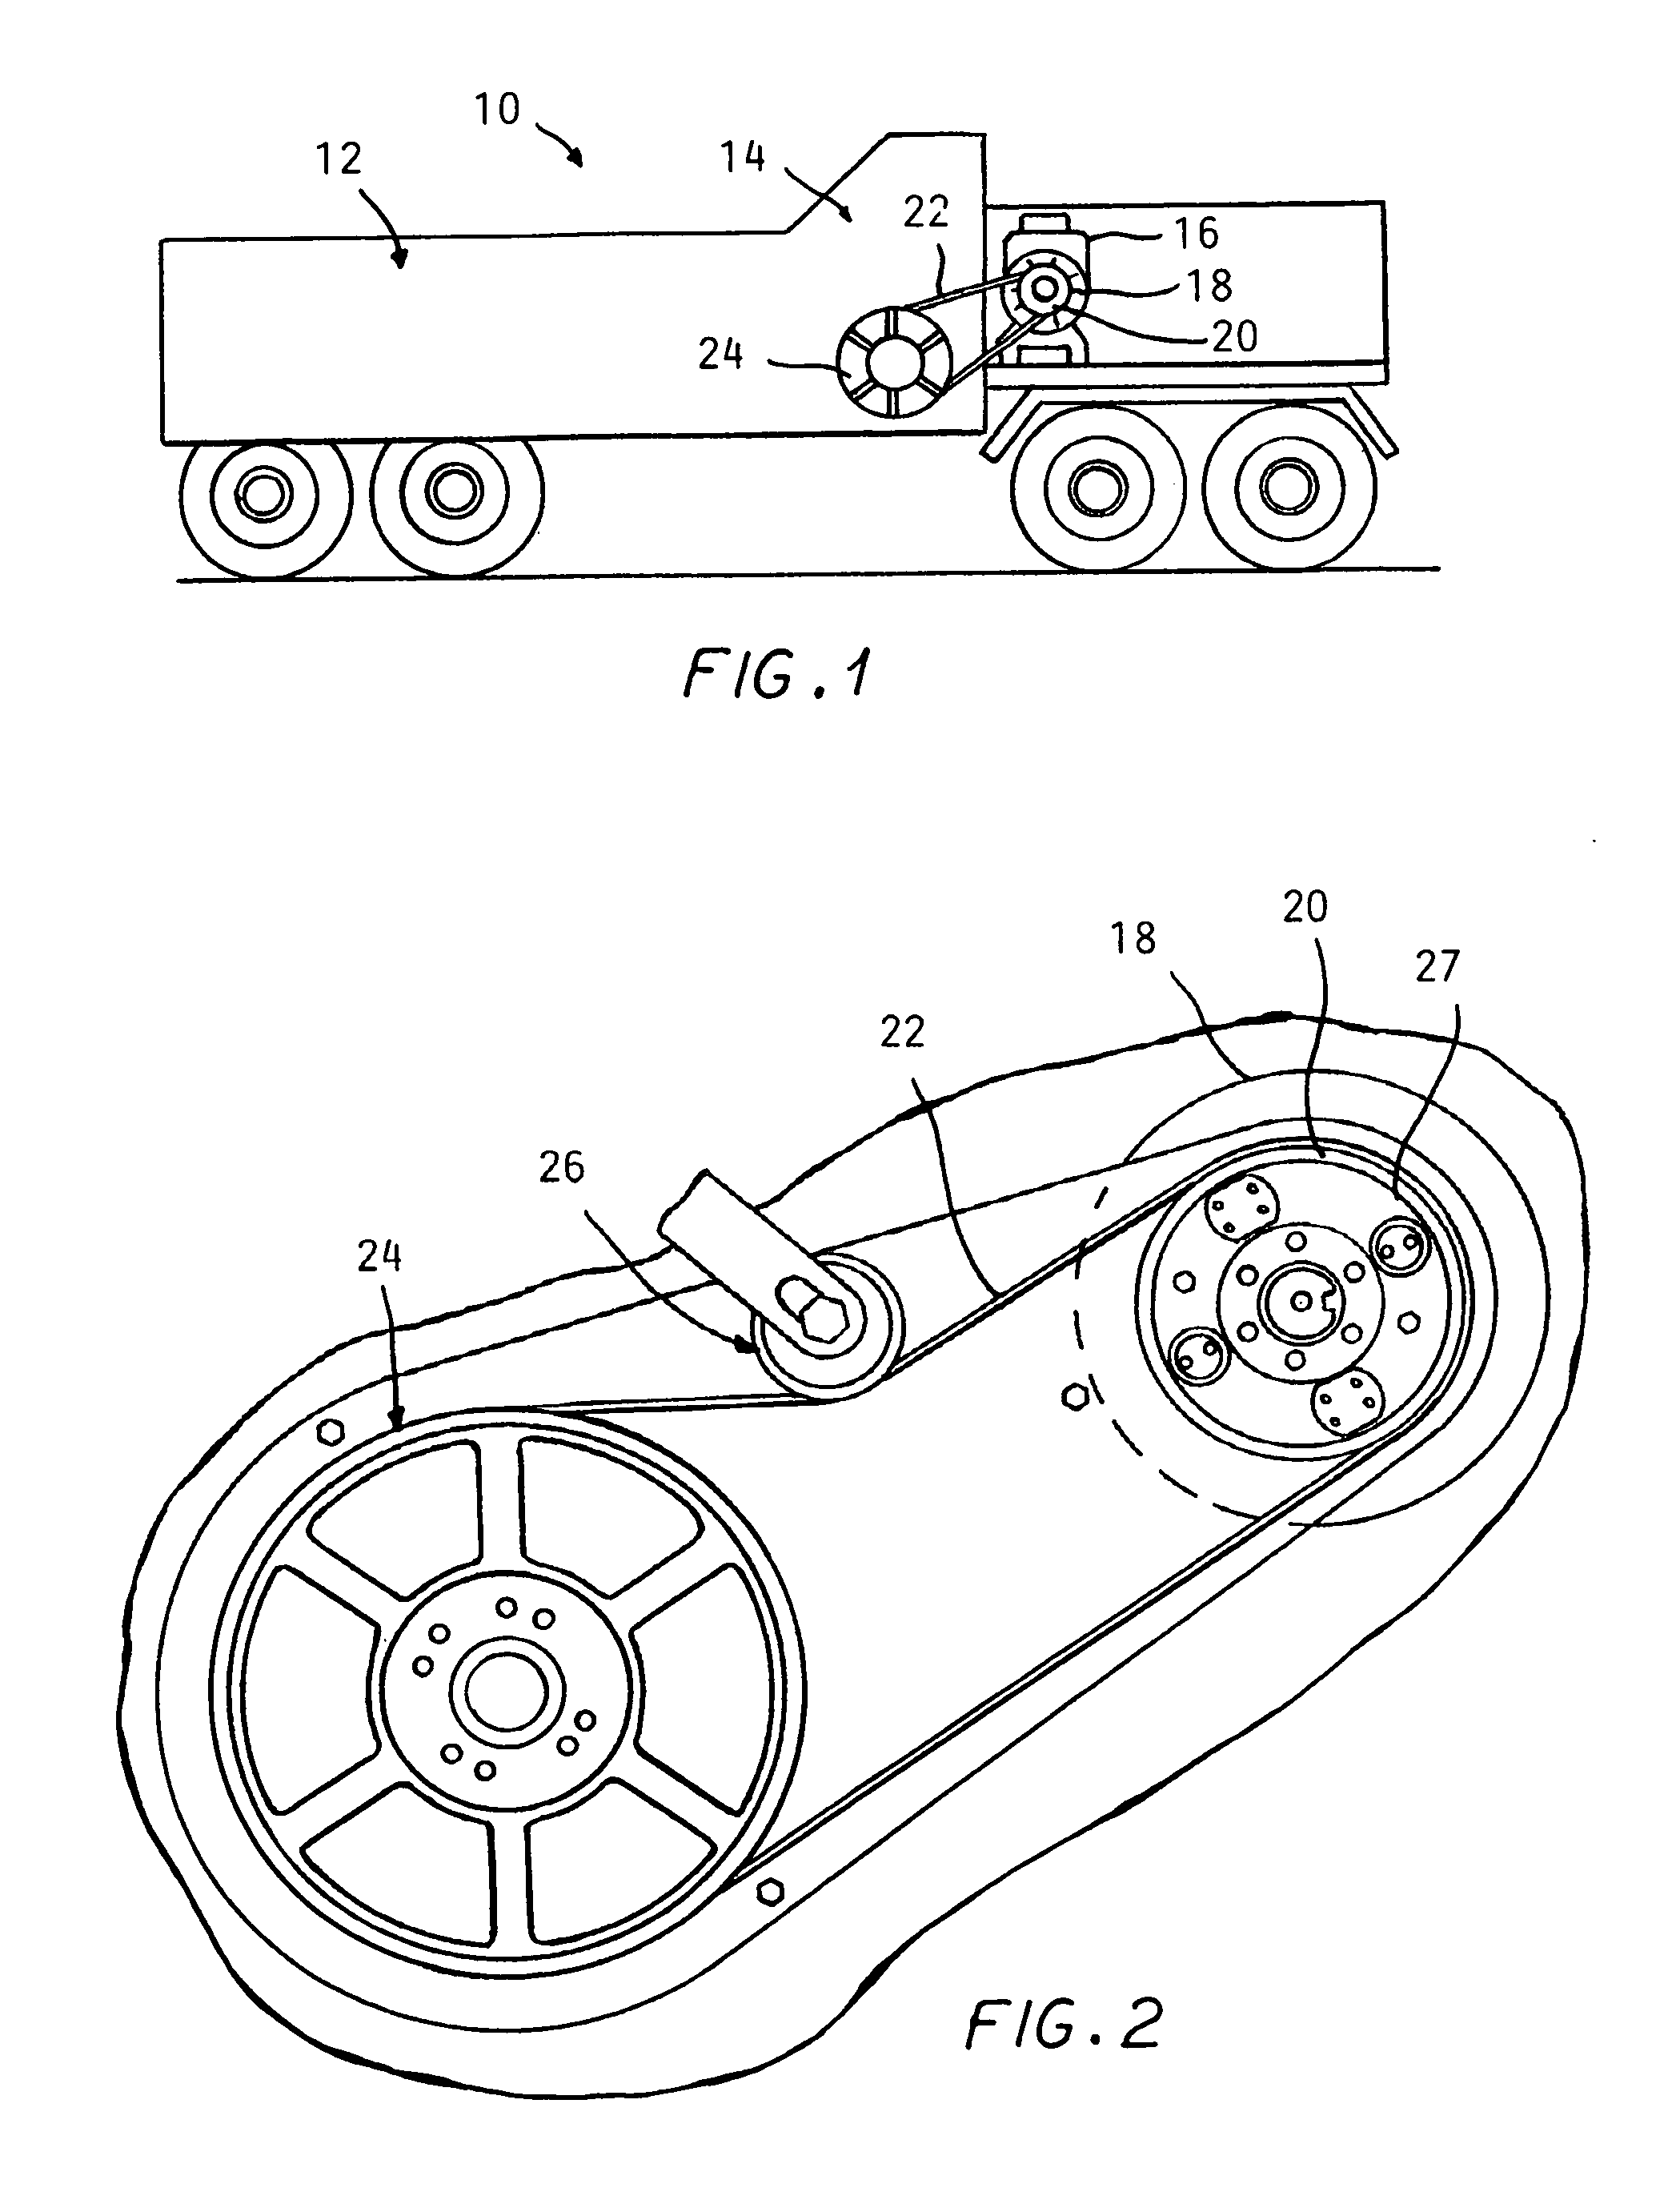 Torque limiter arrangement for a horizontal grinder